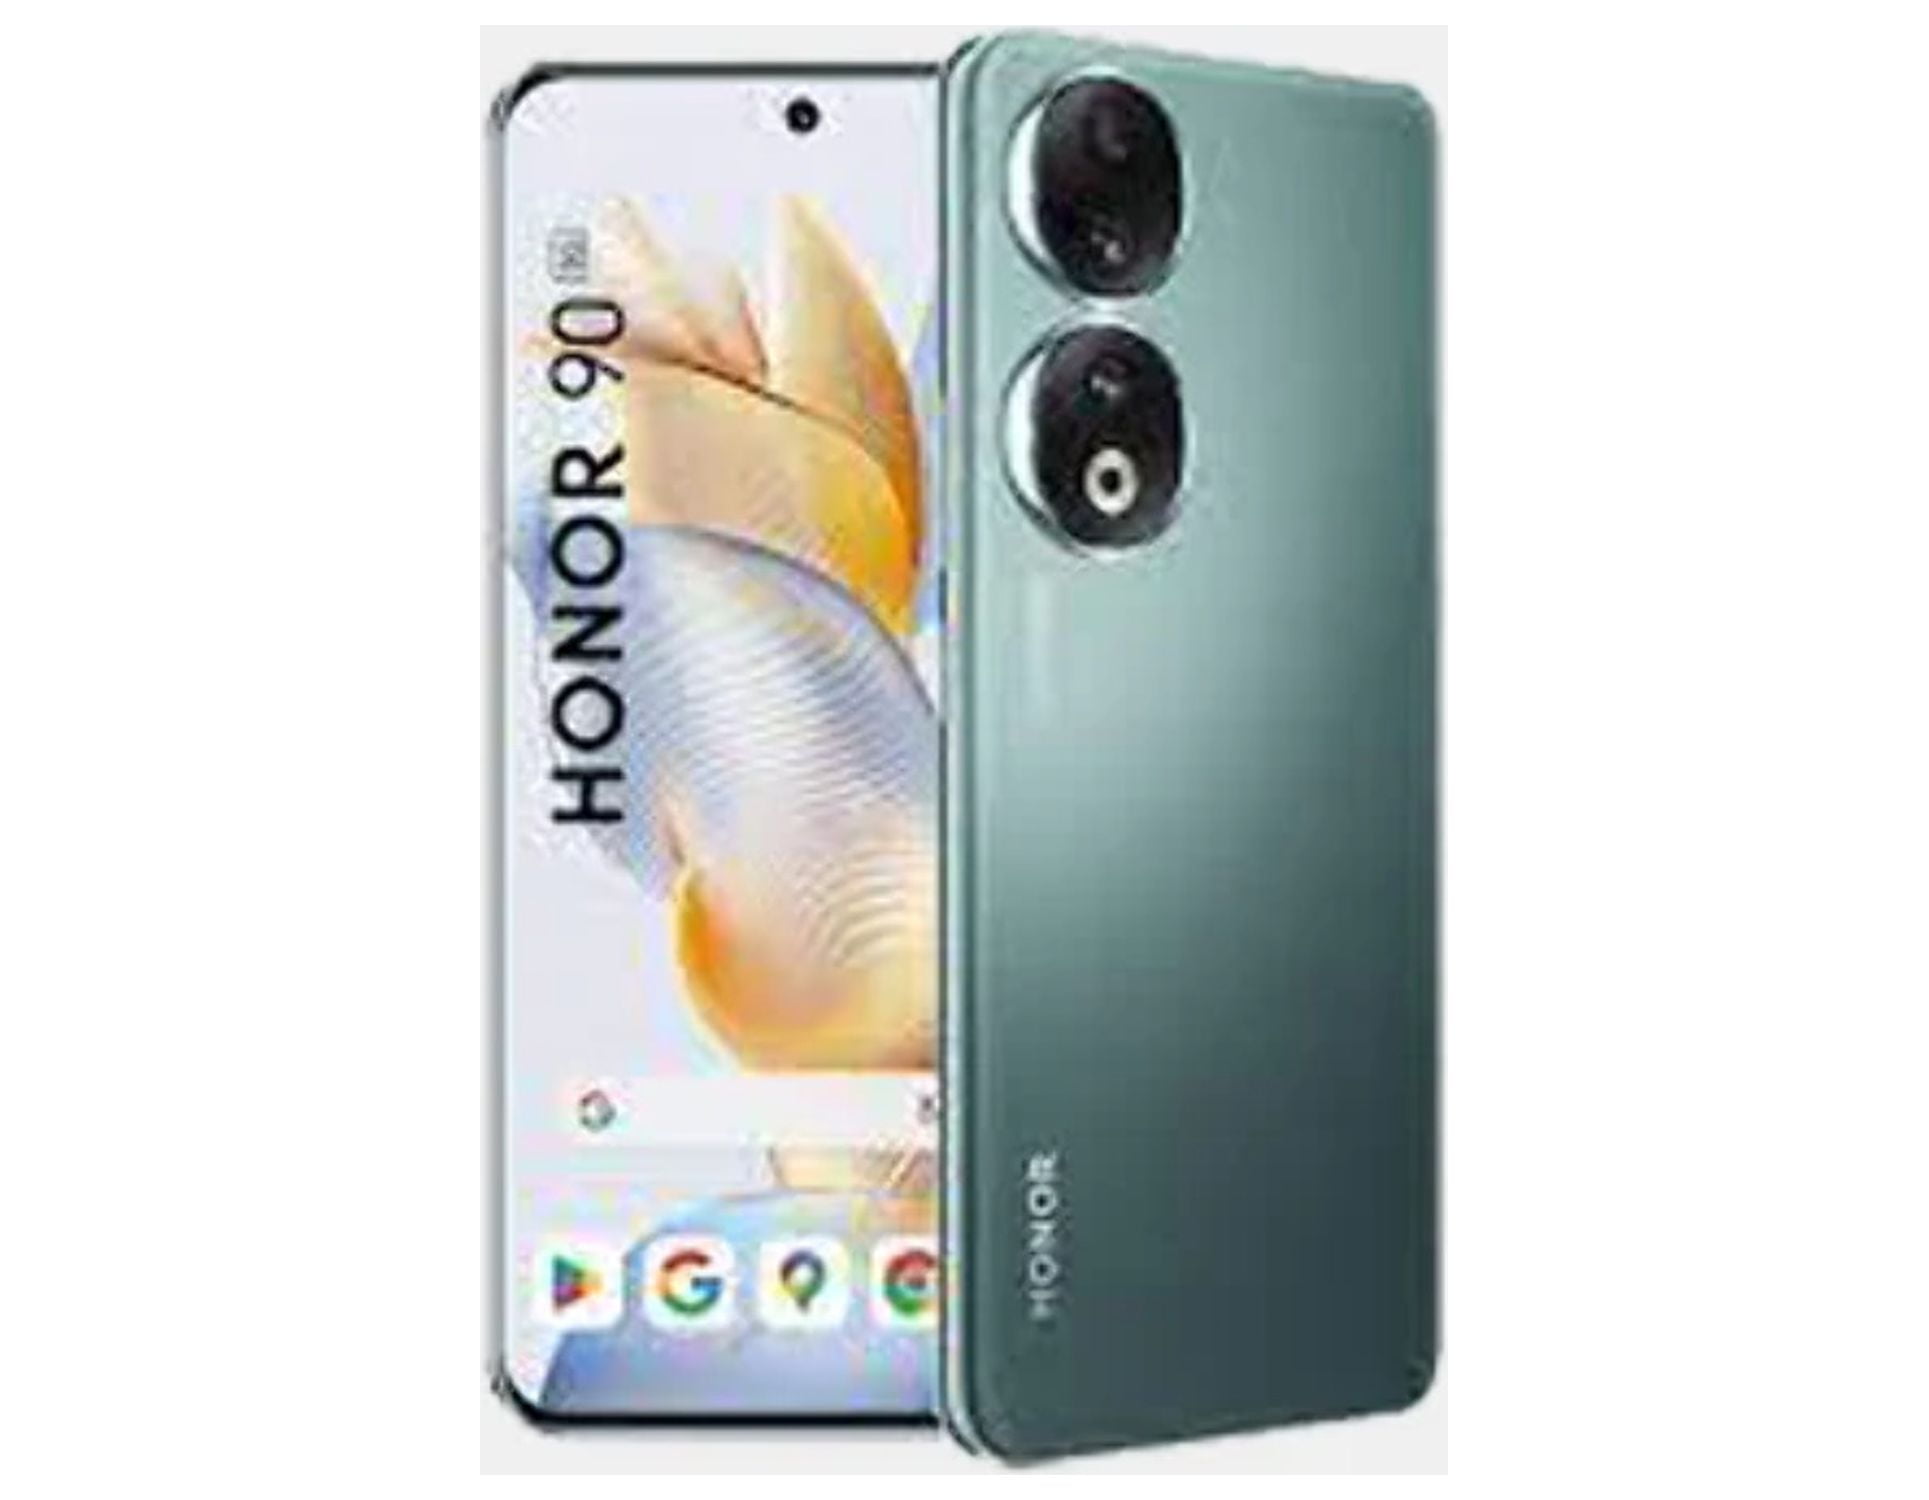 Honor 90, 512 GB - Mobile Phones 